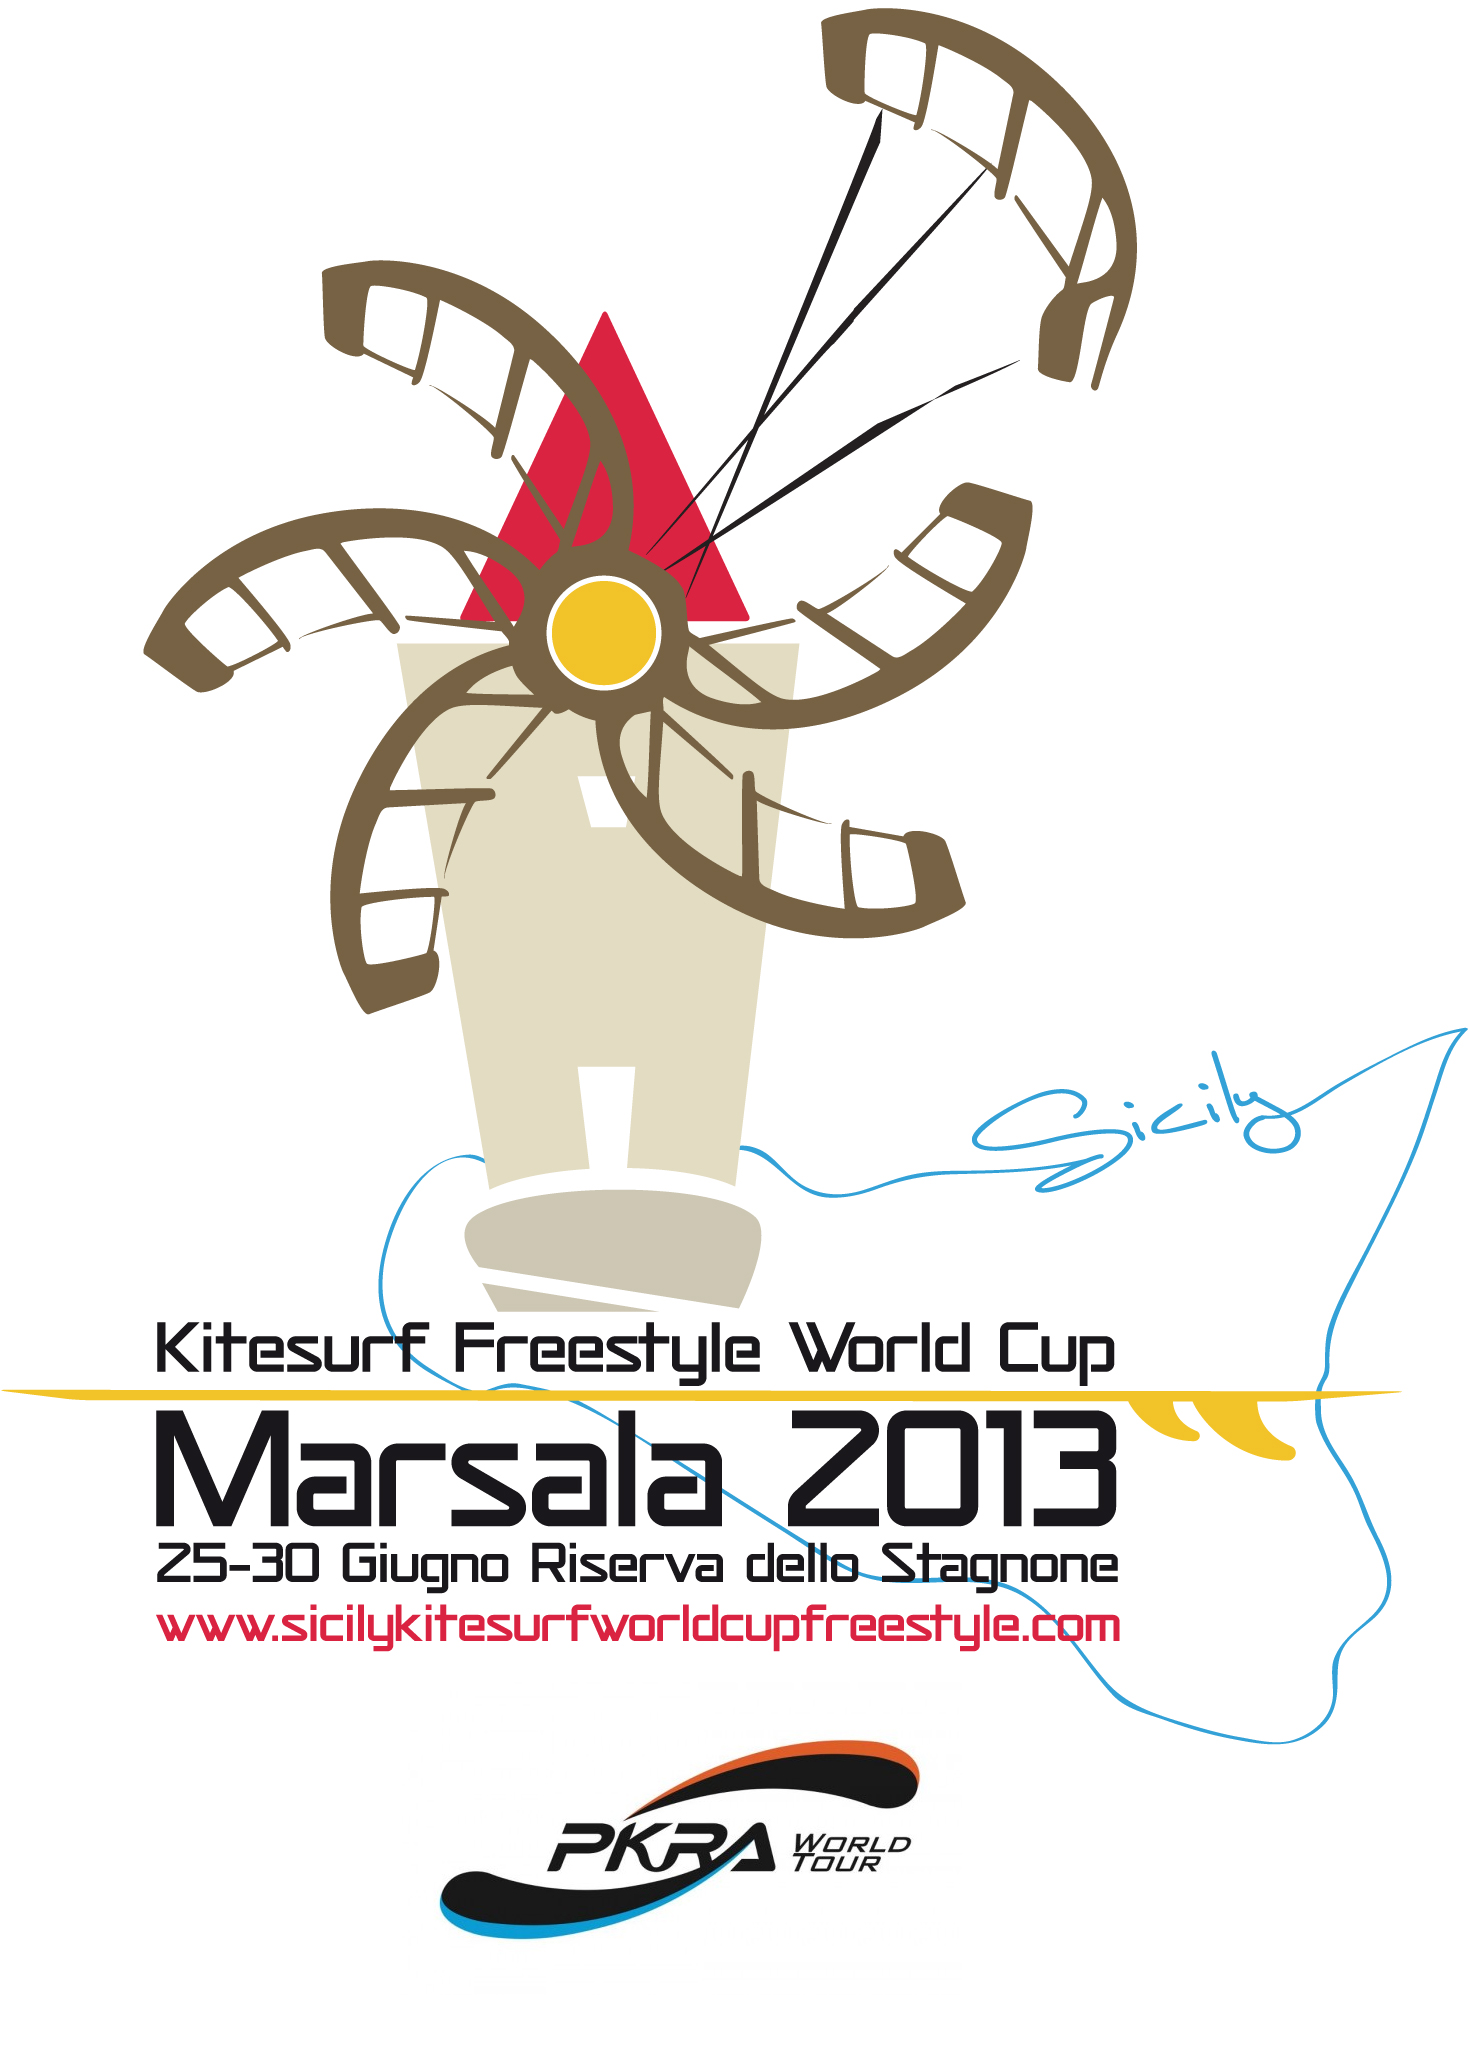 MArsala Kitesurf World cup 2013